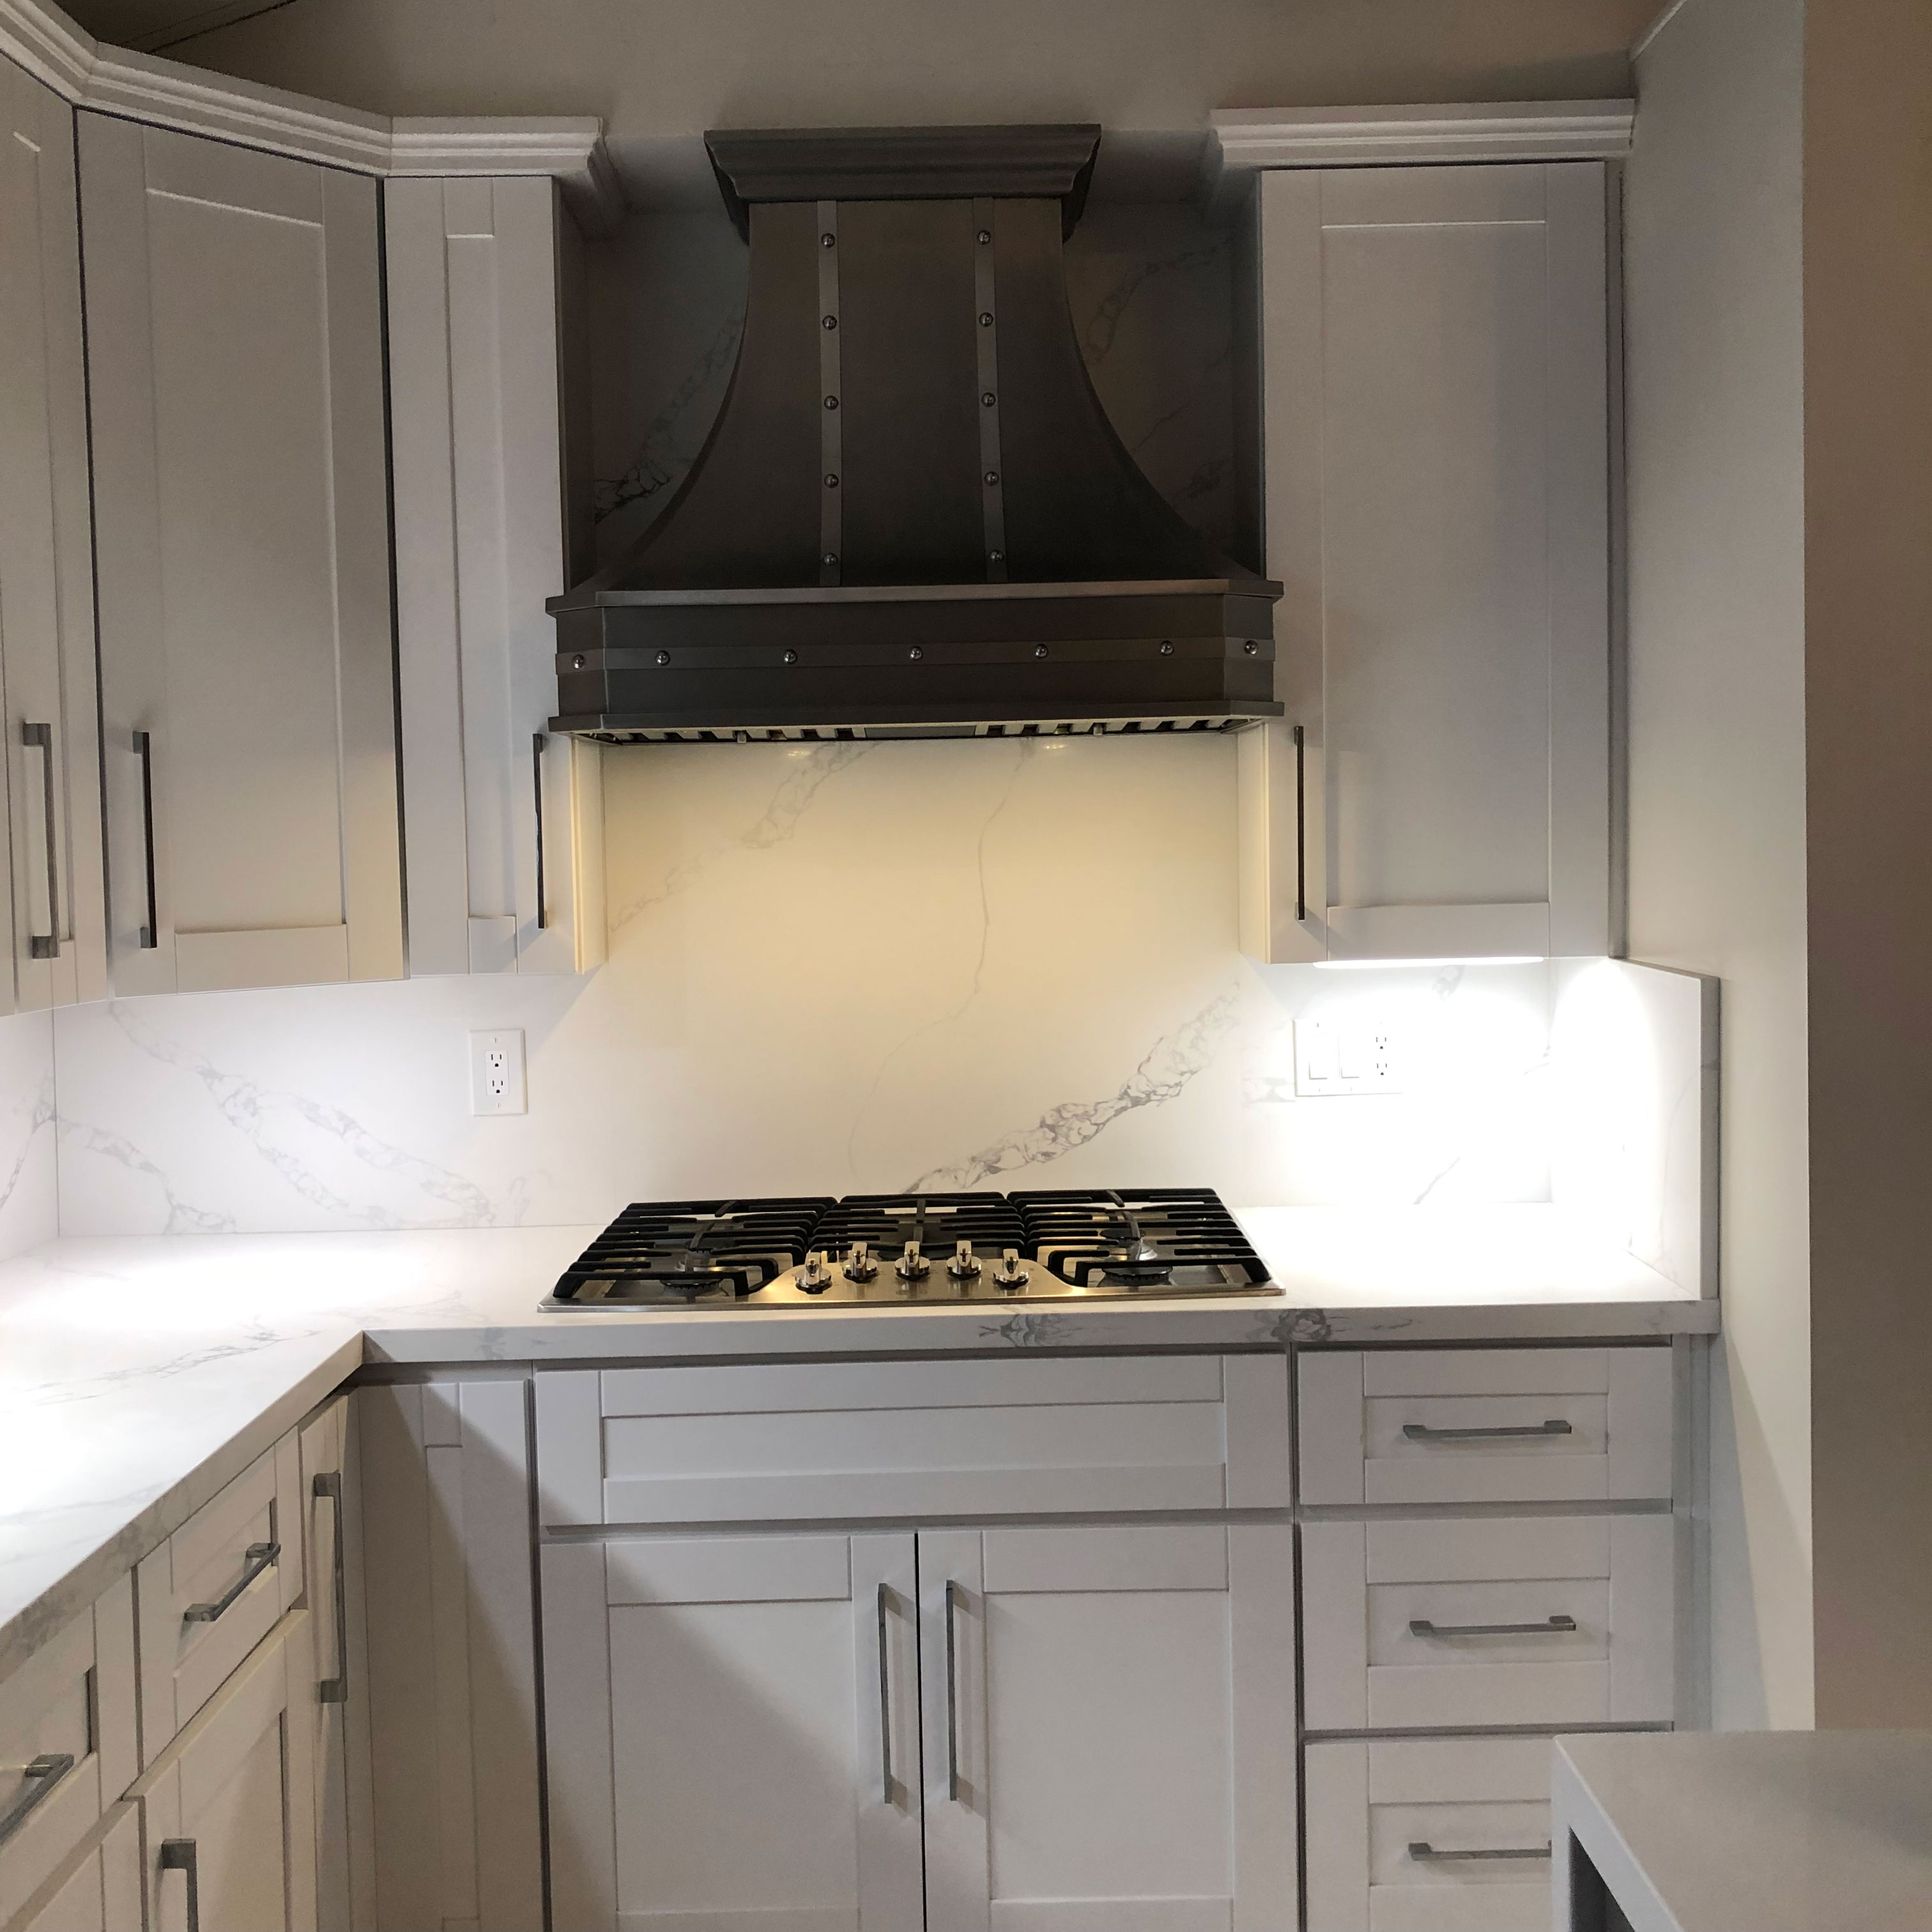 Kitchen design featuring, inspired range hood, white kitchen cabinets, exquisite marble kitchen countertops,marble backsplash